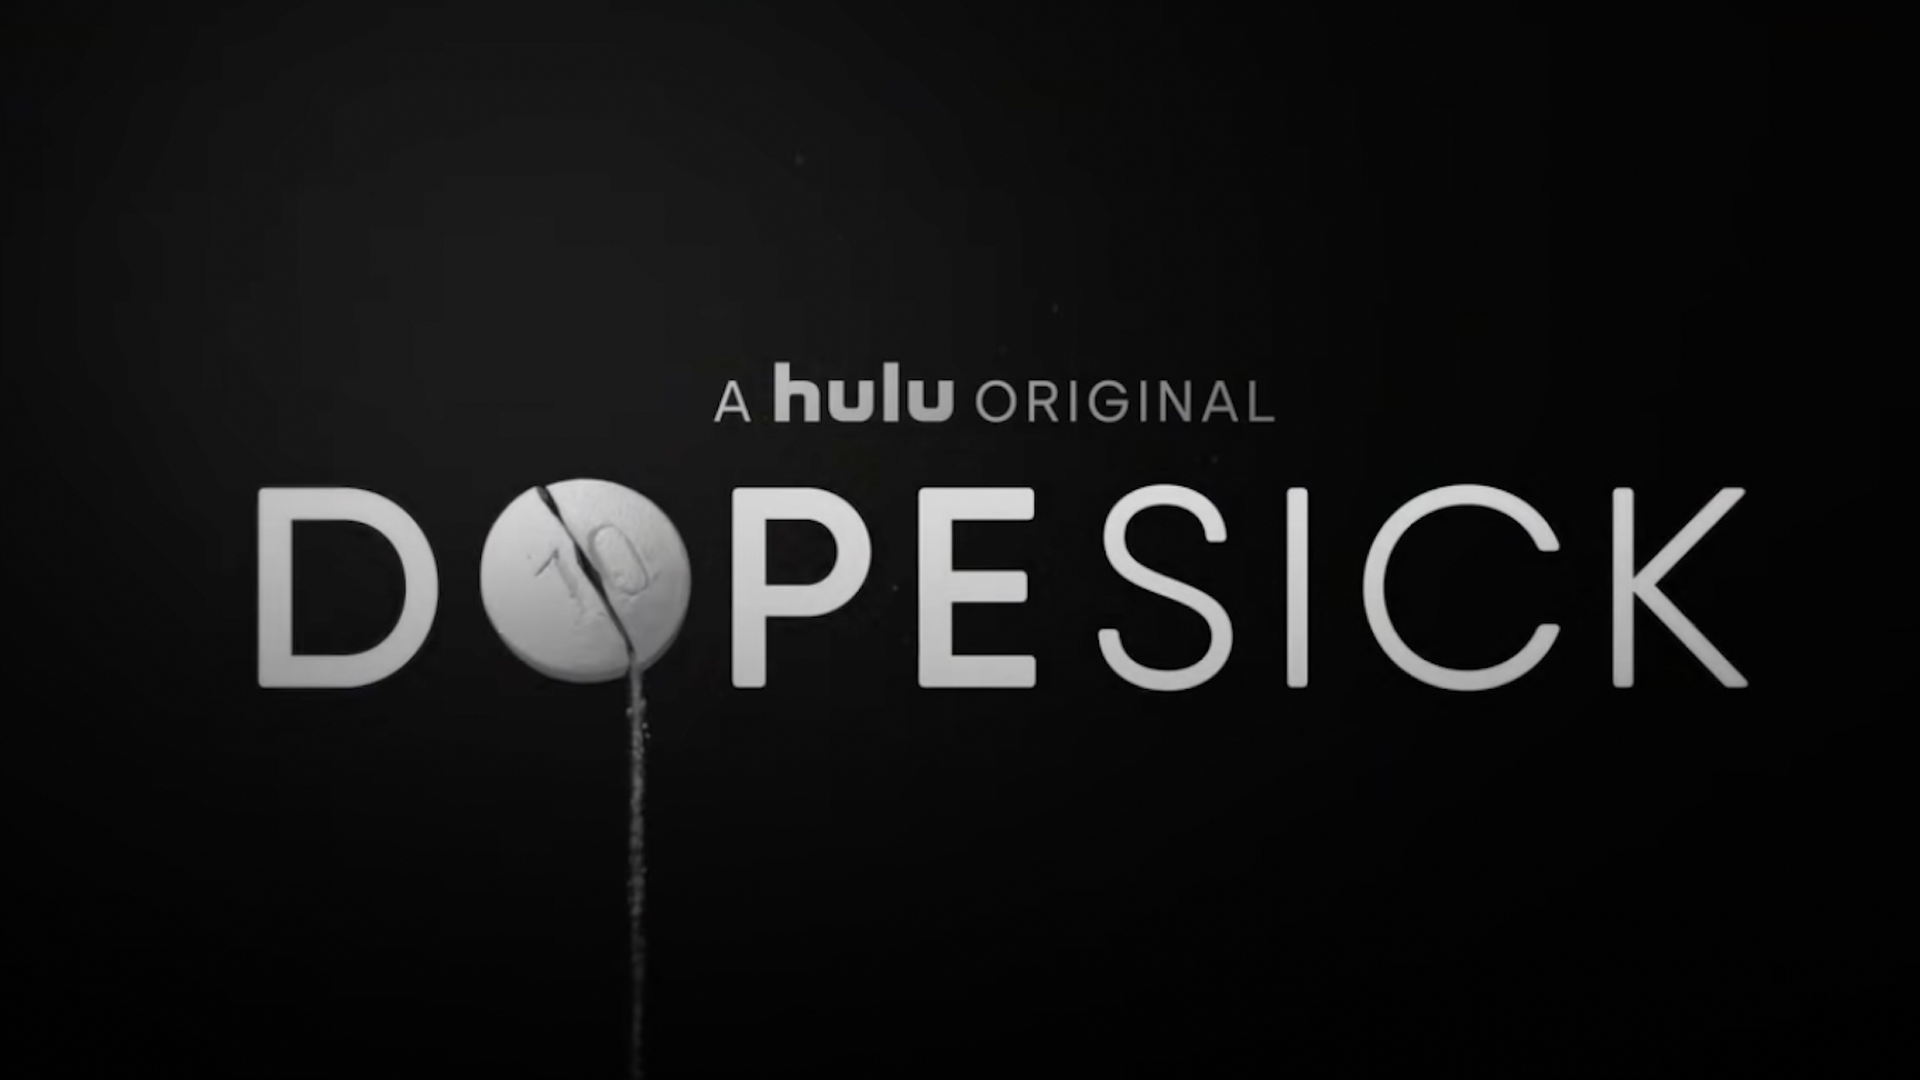 A screenshot of the trailer for the Hulu original show Dopesick.